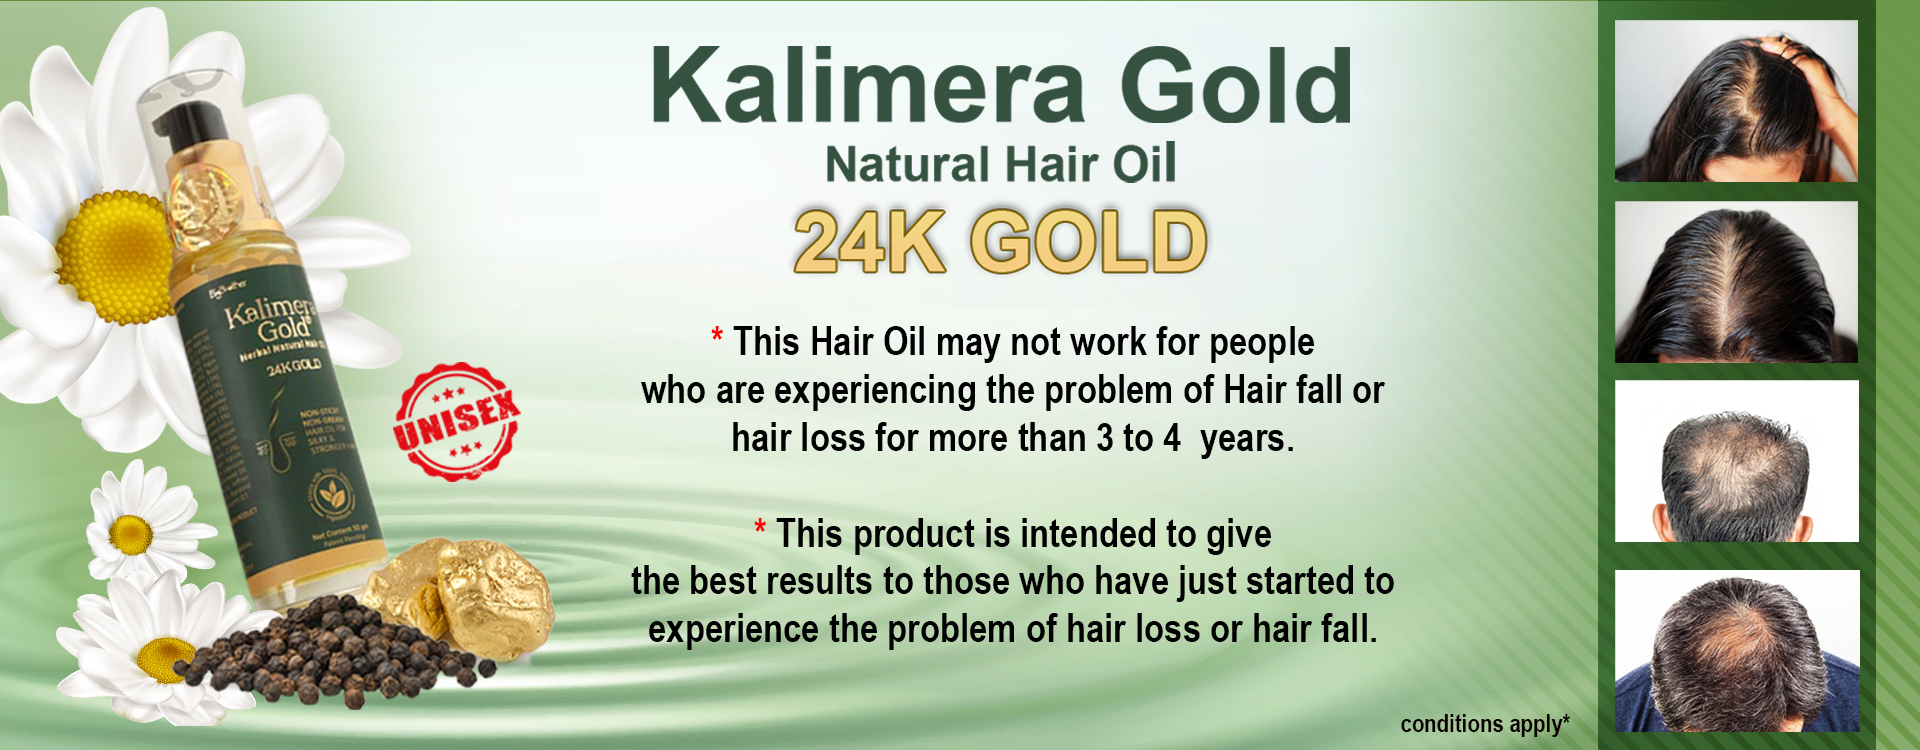 kalimera gold natural hair oil